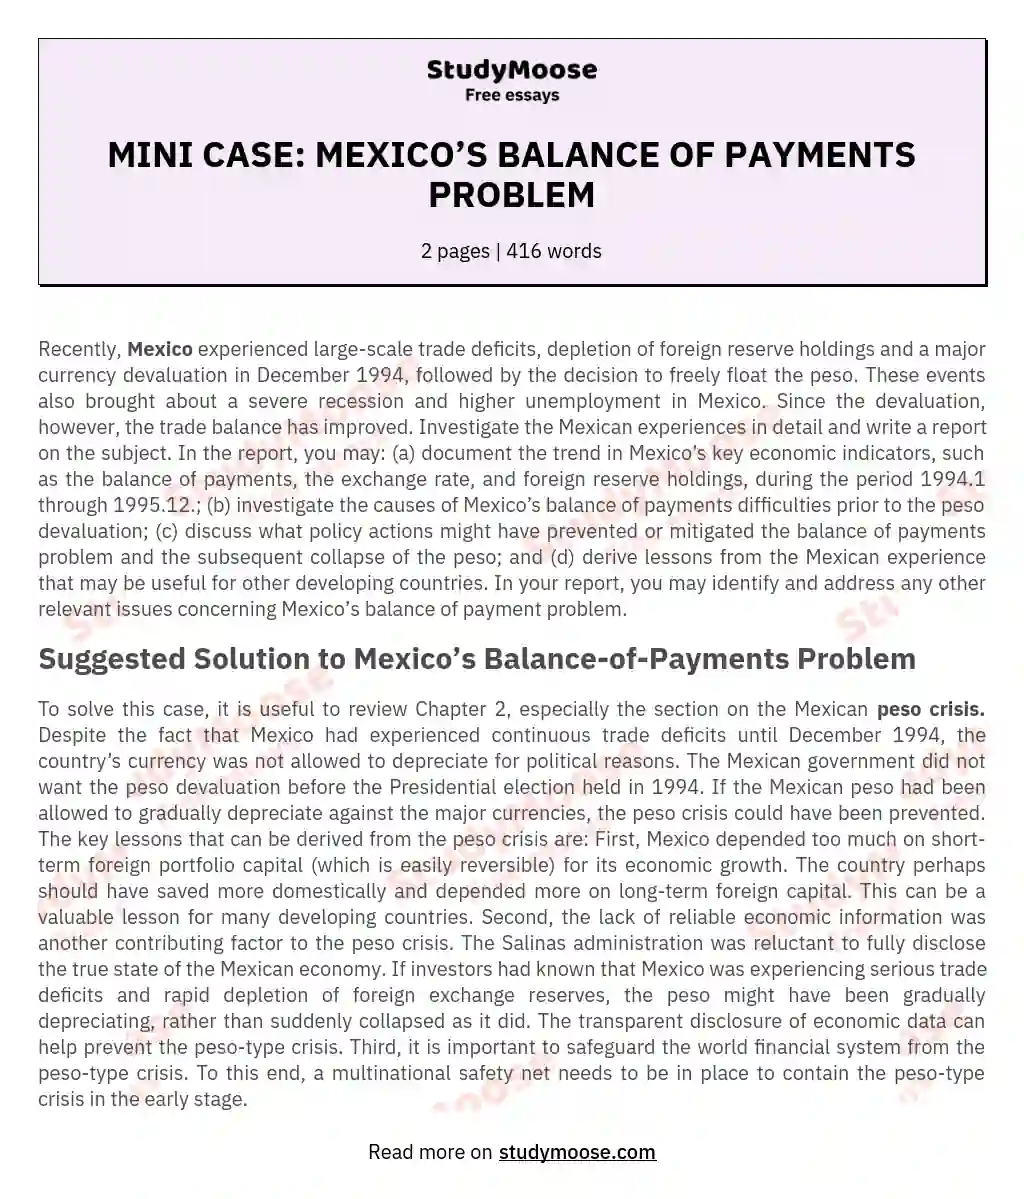 MINI CASE: MEXICO’S BALANCE OF PAYMENTS PROBLEM essay